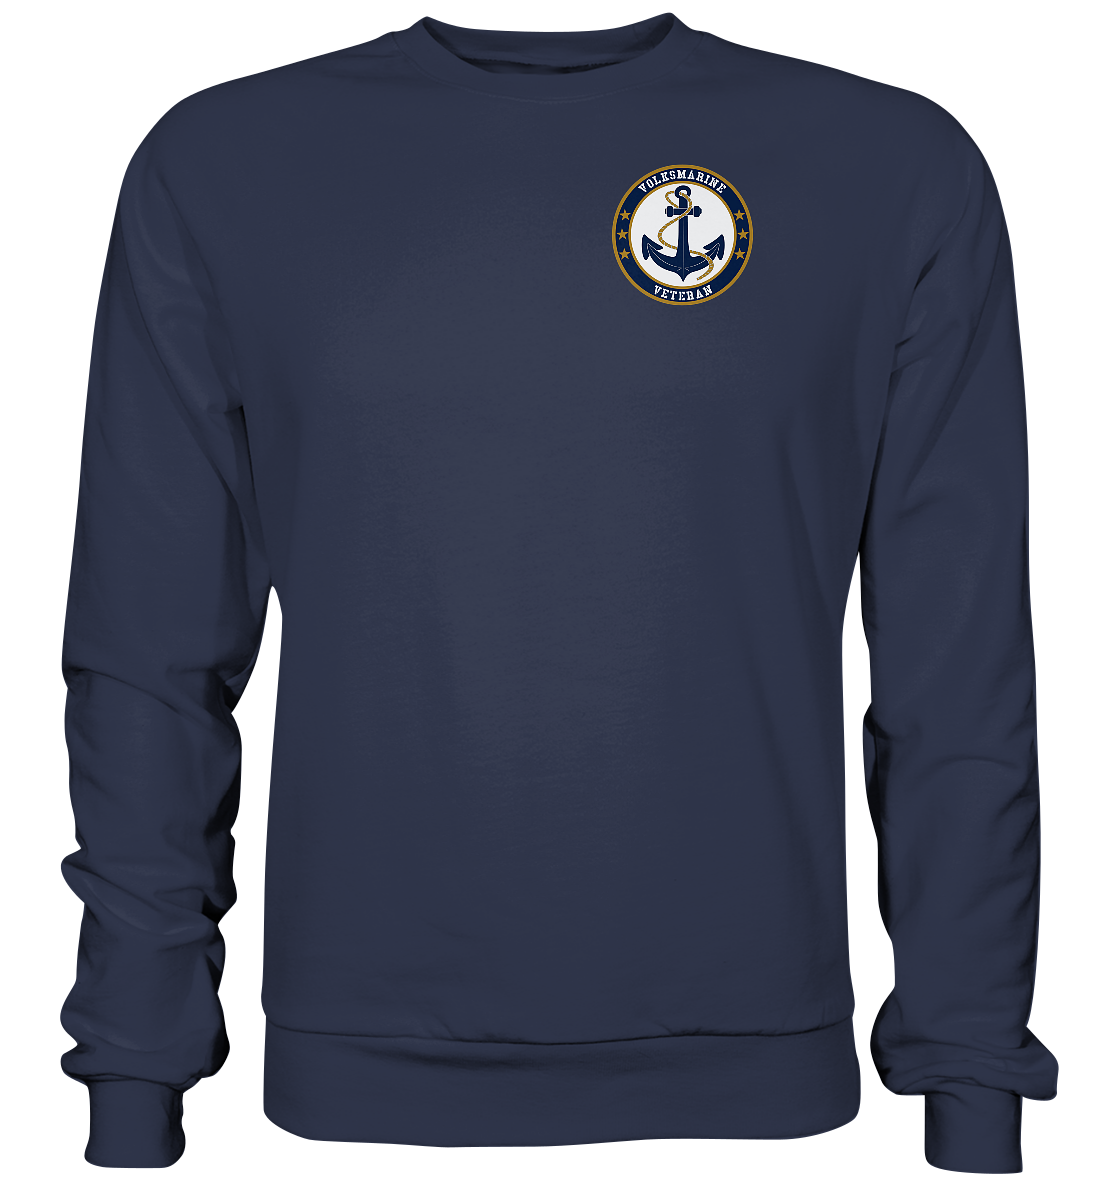 VOLKSMARINE Marine Veteran Brustlogo - Premium Sweatshirt